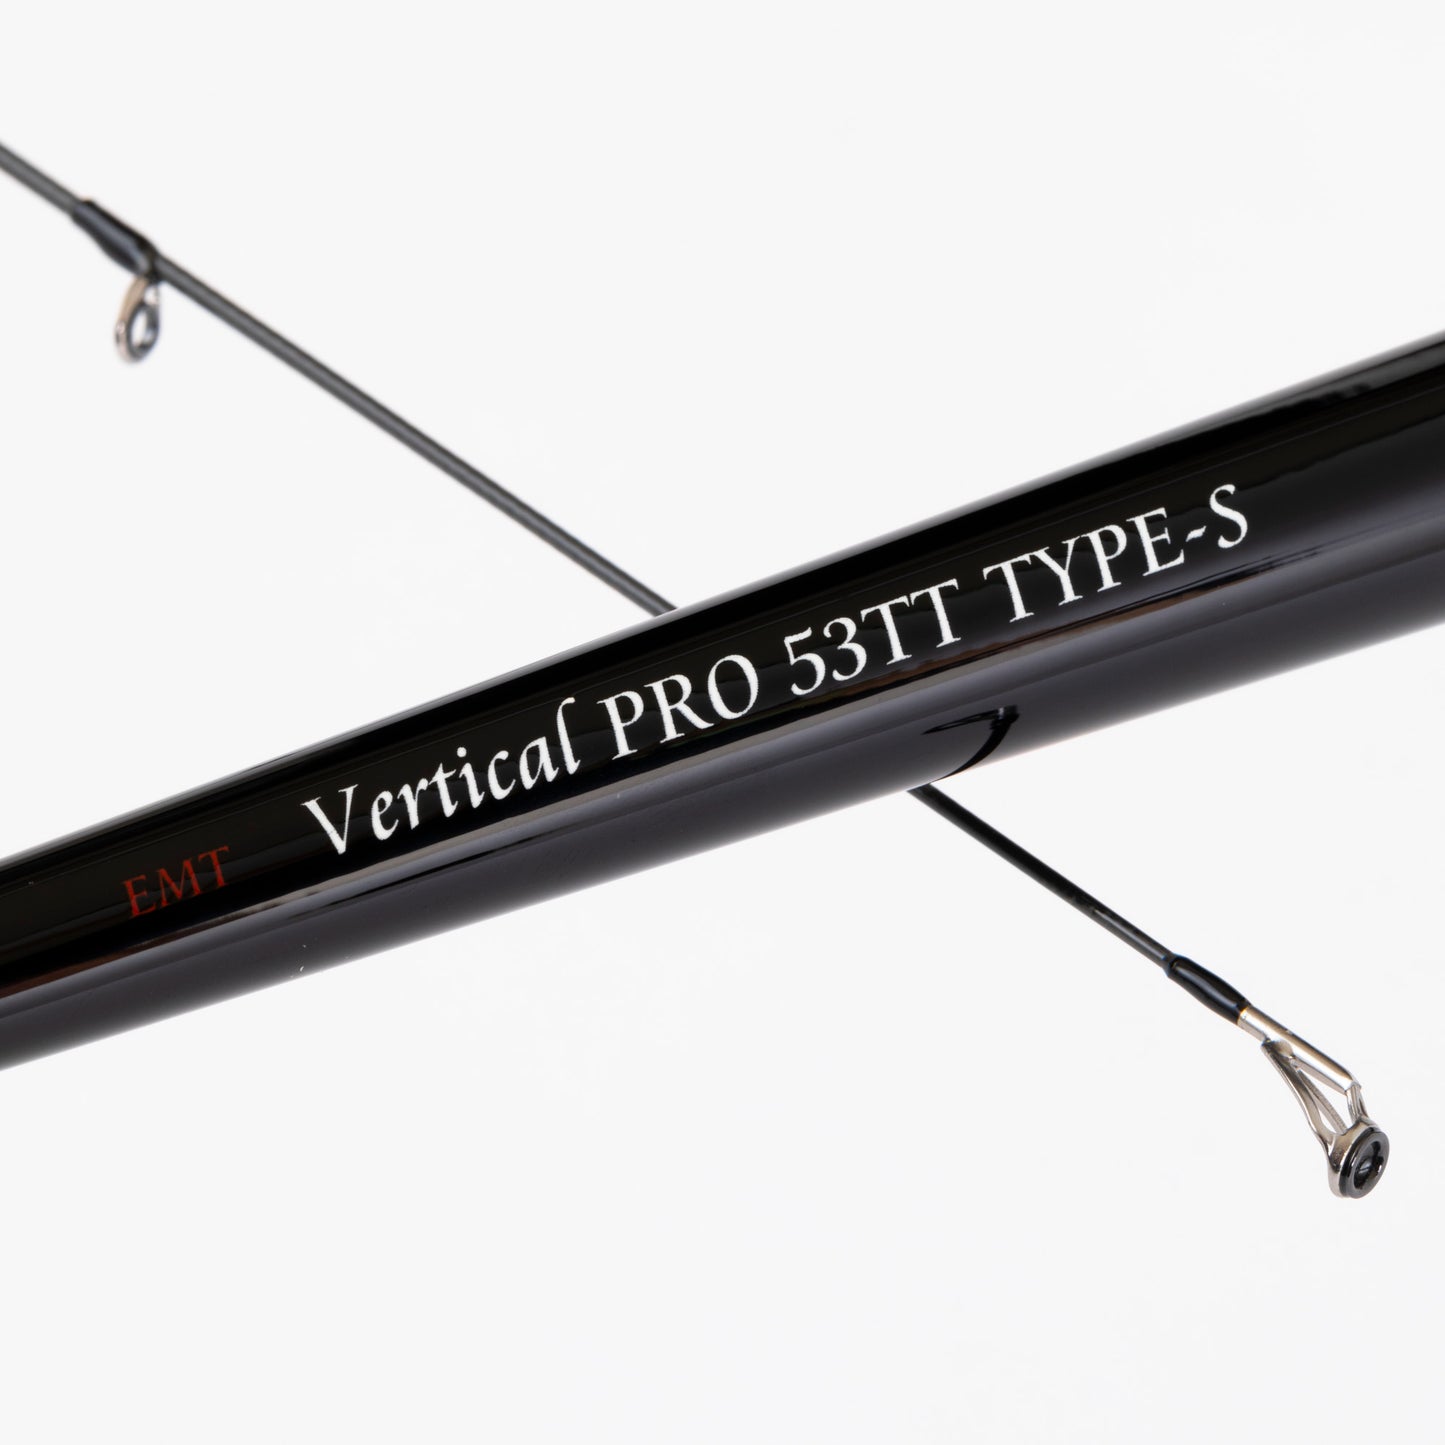 Vertical PRO 53TT TYPE-S（バーティカルプロ）